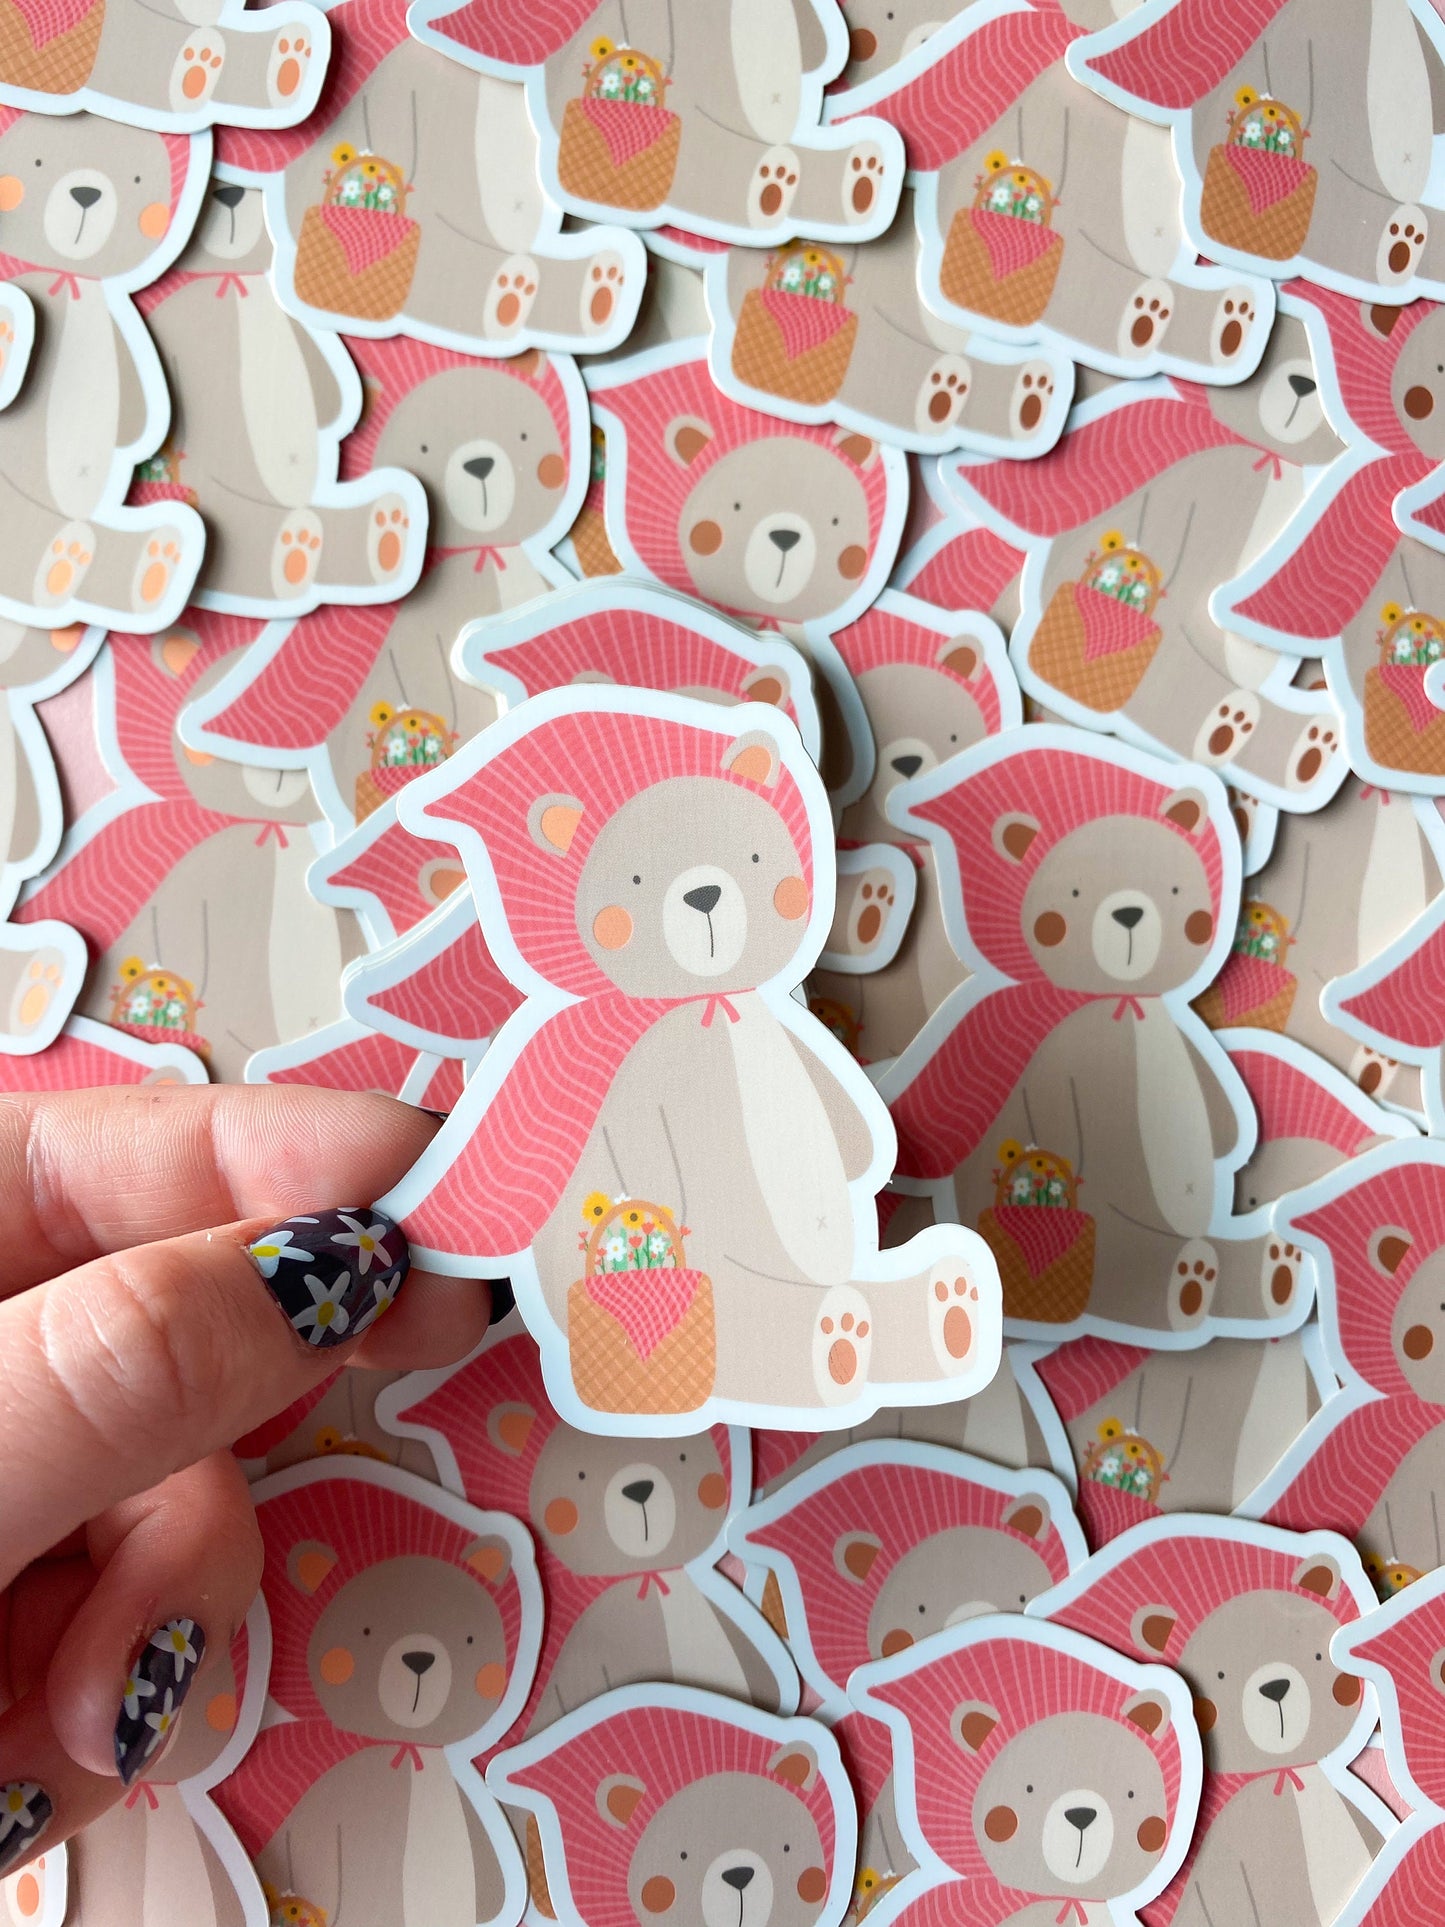 Teddy Bears Picnic Mirrored Sticker